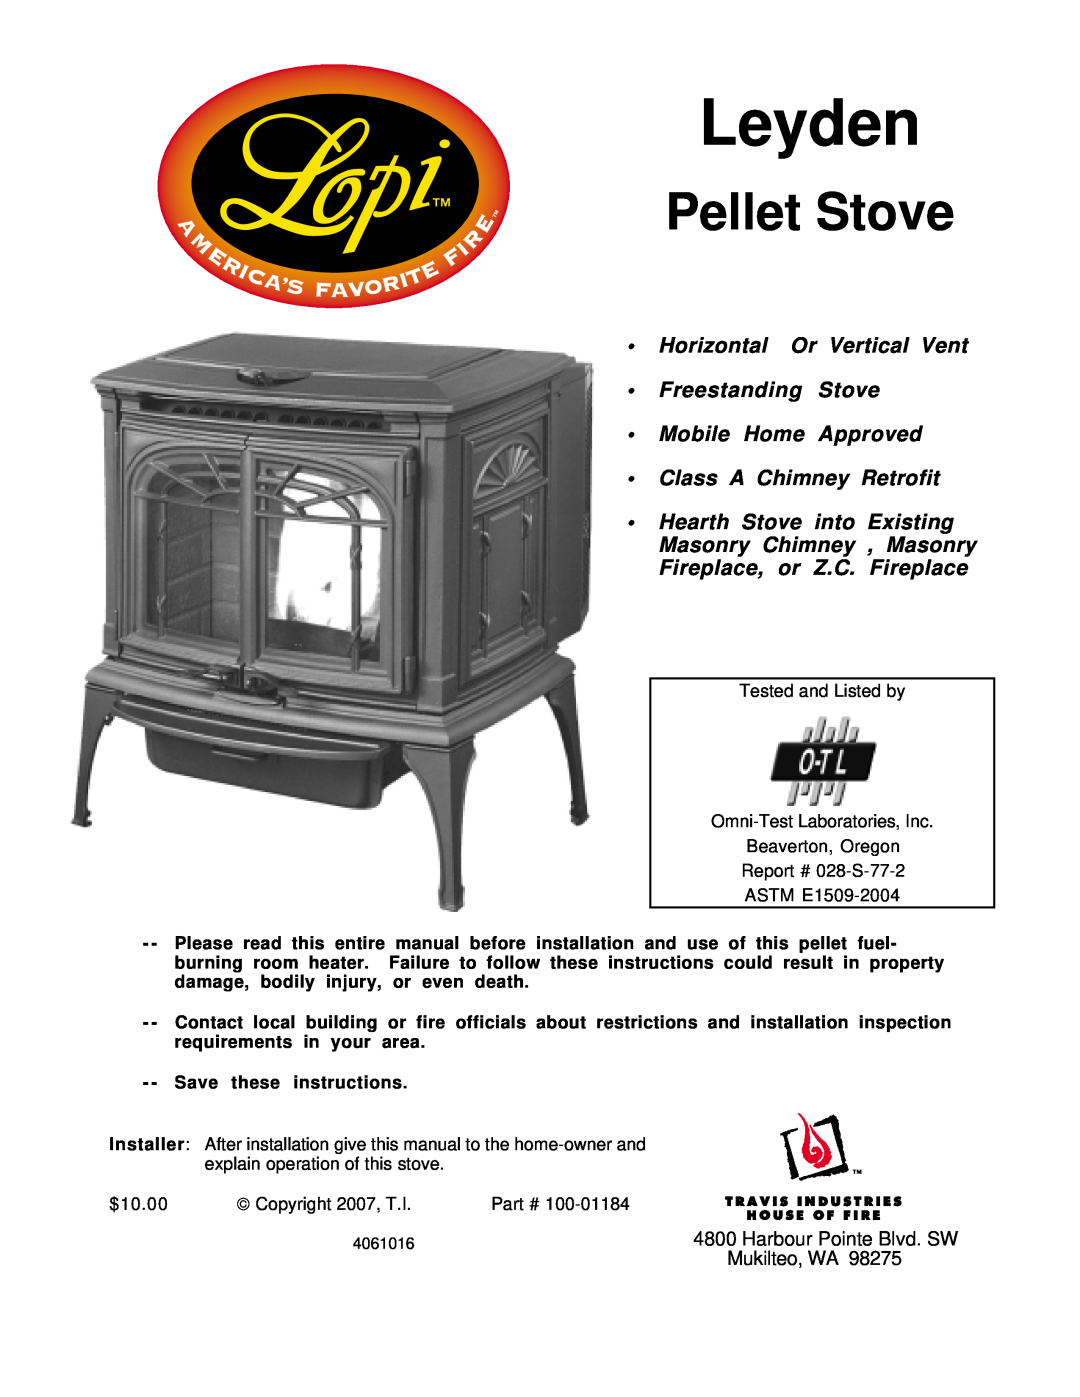 Lopi Leyden Pellet Stove manual Horizontal Or Vertical Vent, Freestanding Stove Mobile Home Approved, Mukilteo, WA 